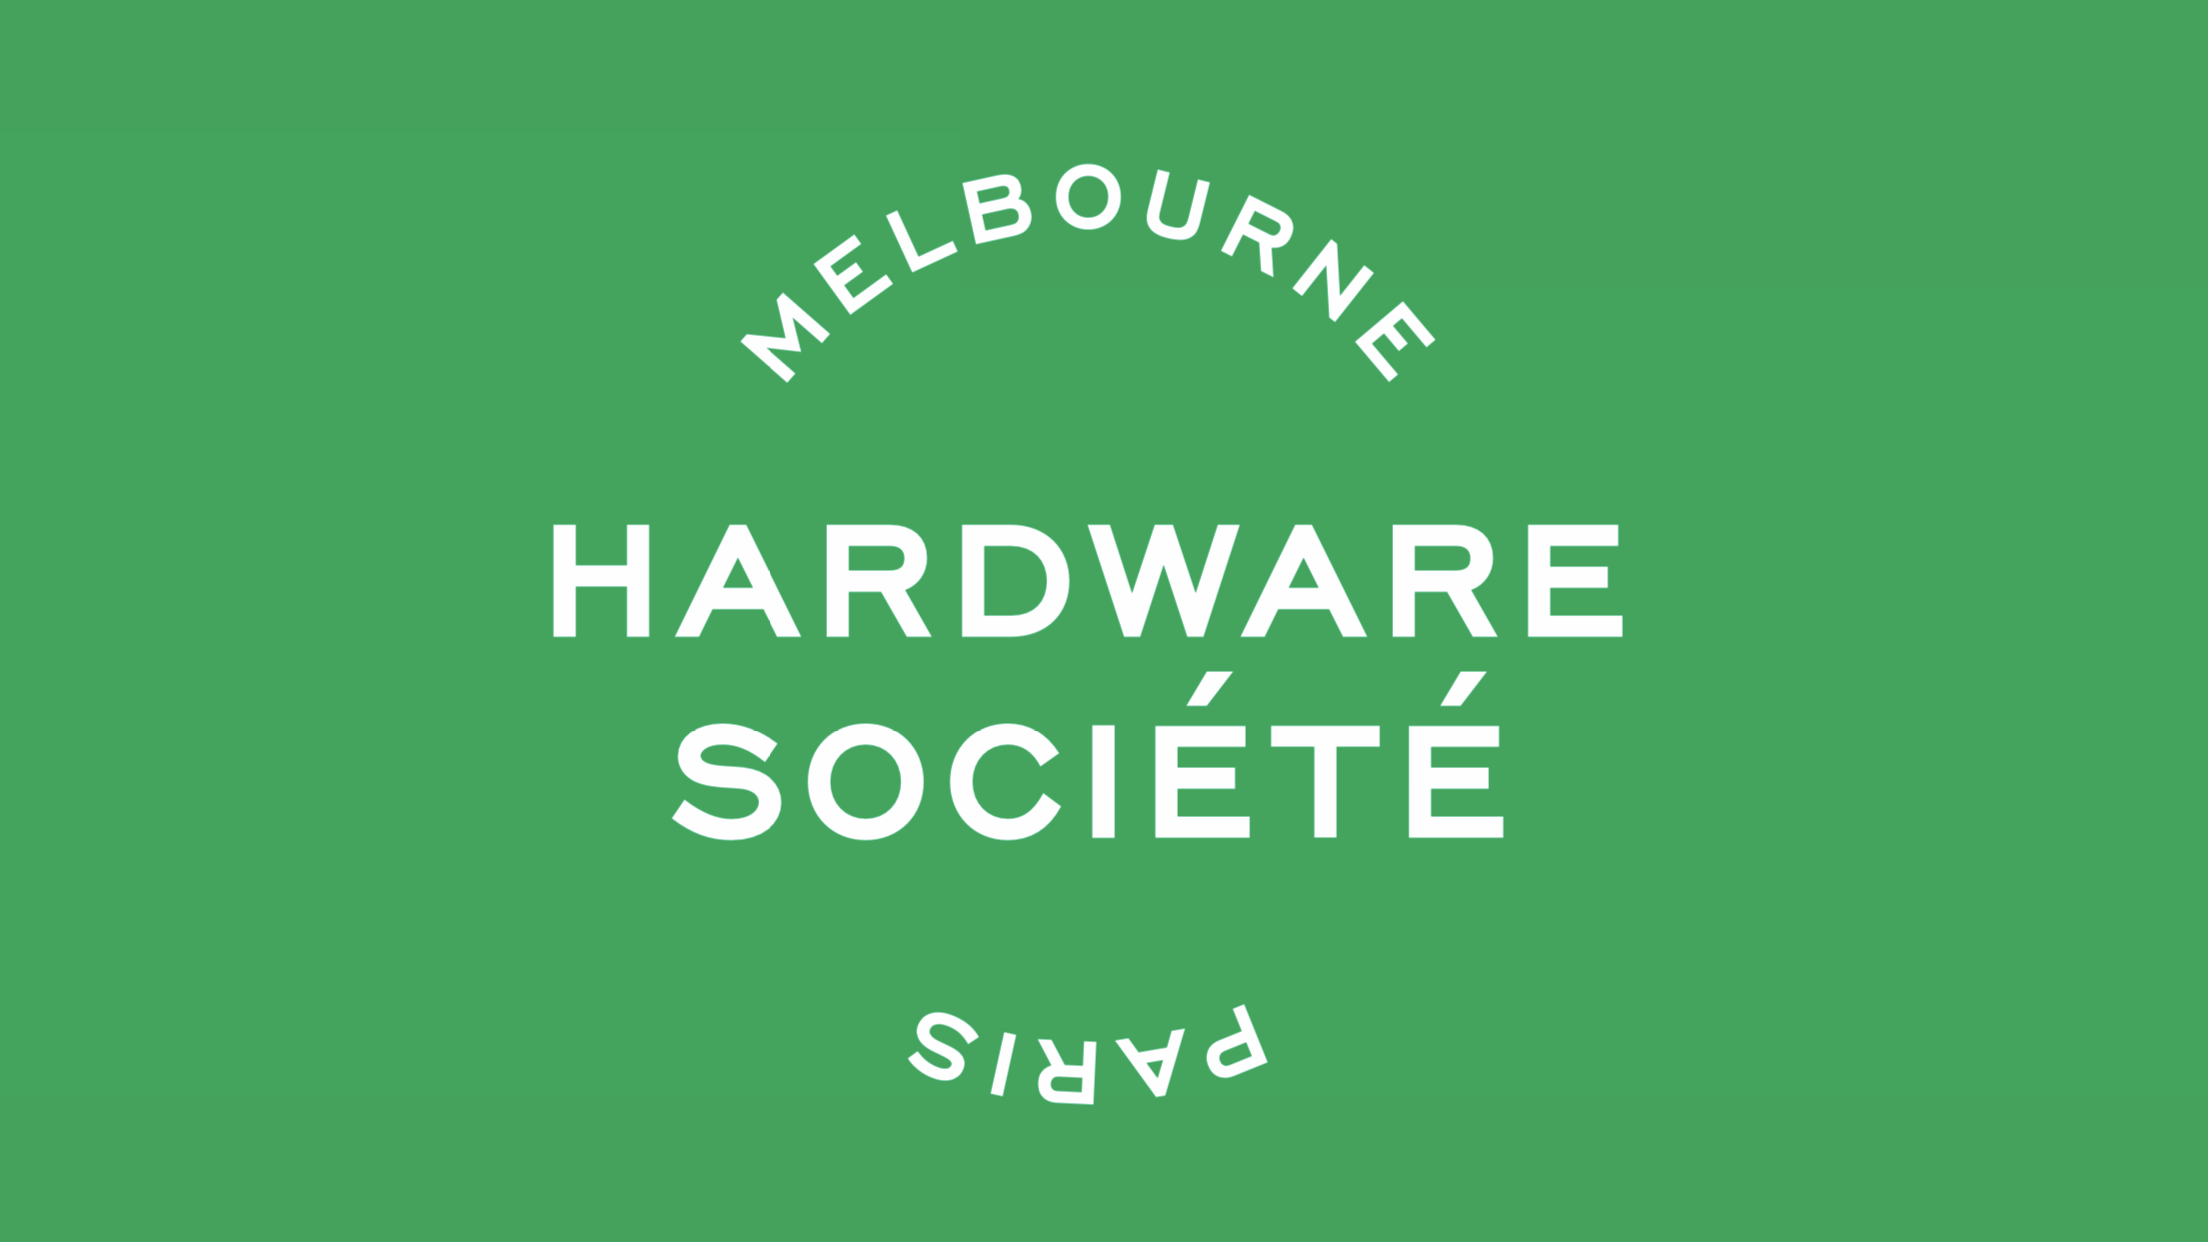 The Hardware Societe